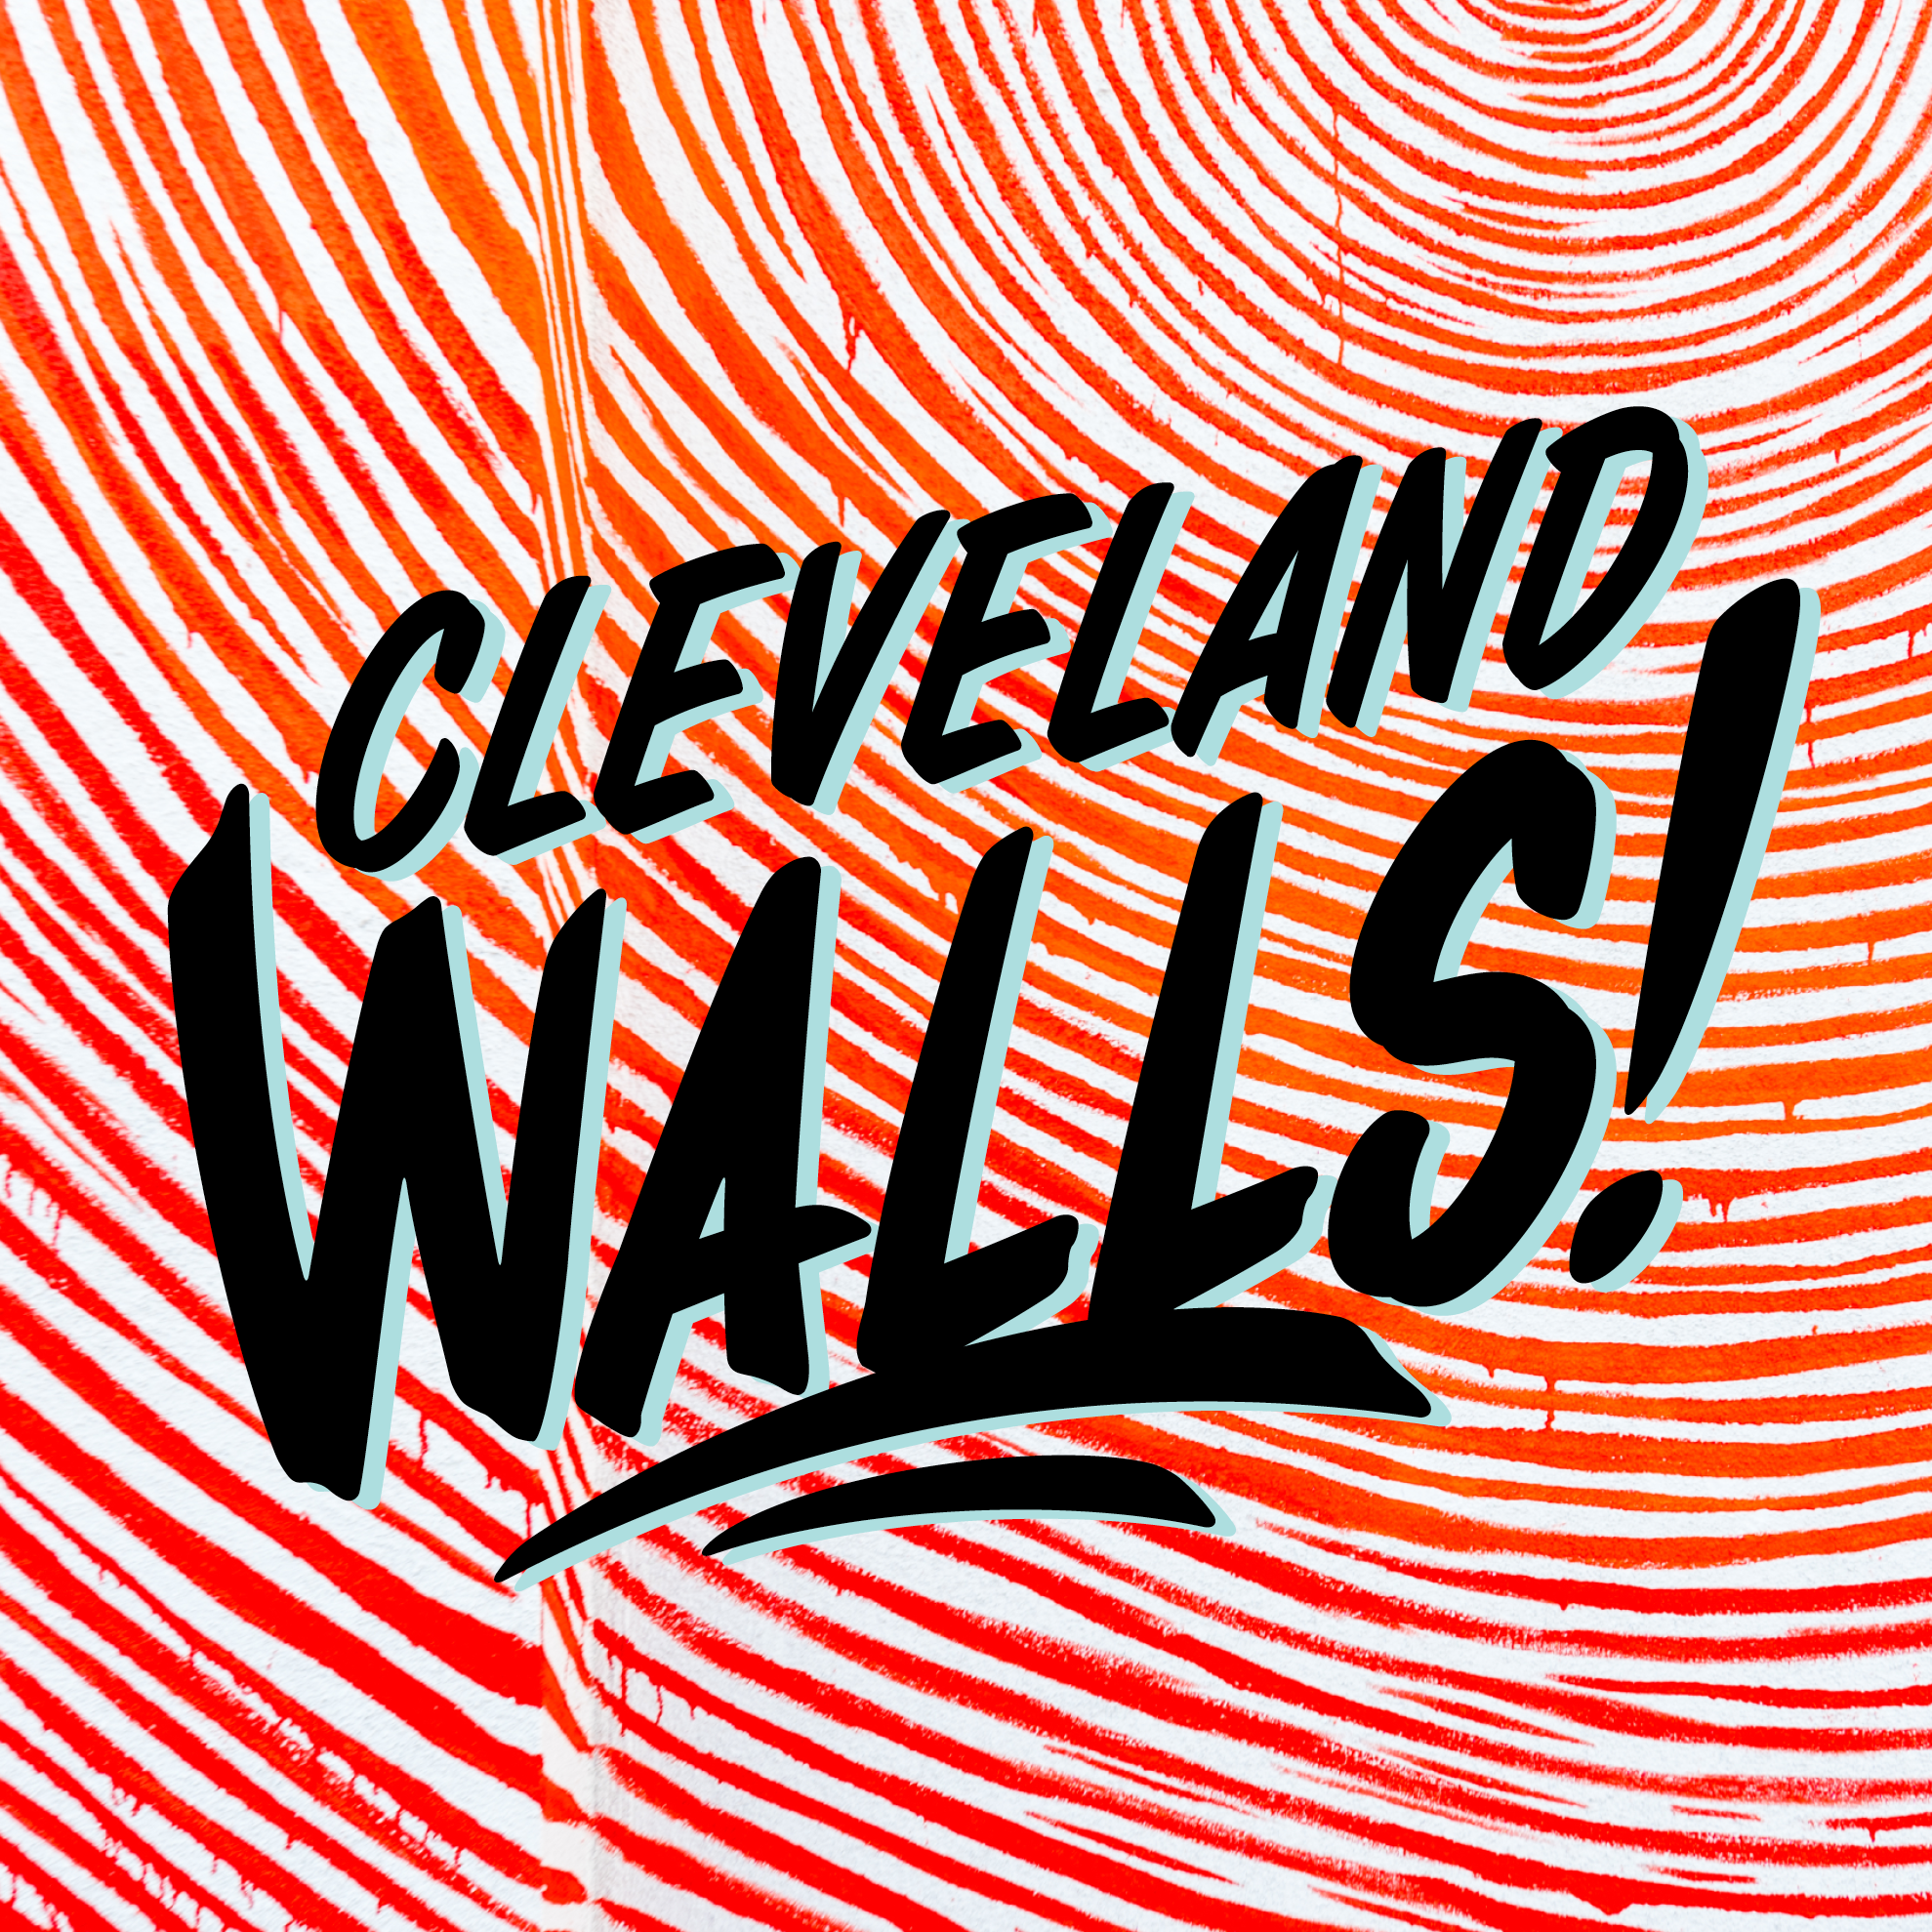 Cleveland Walls web grid